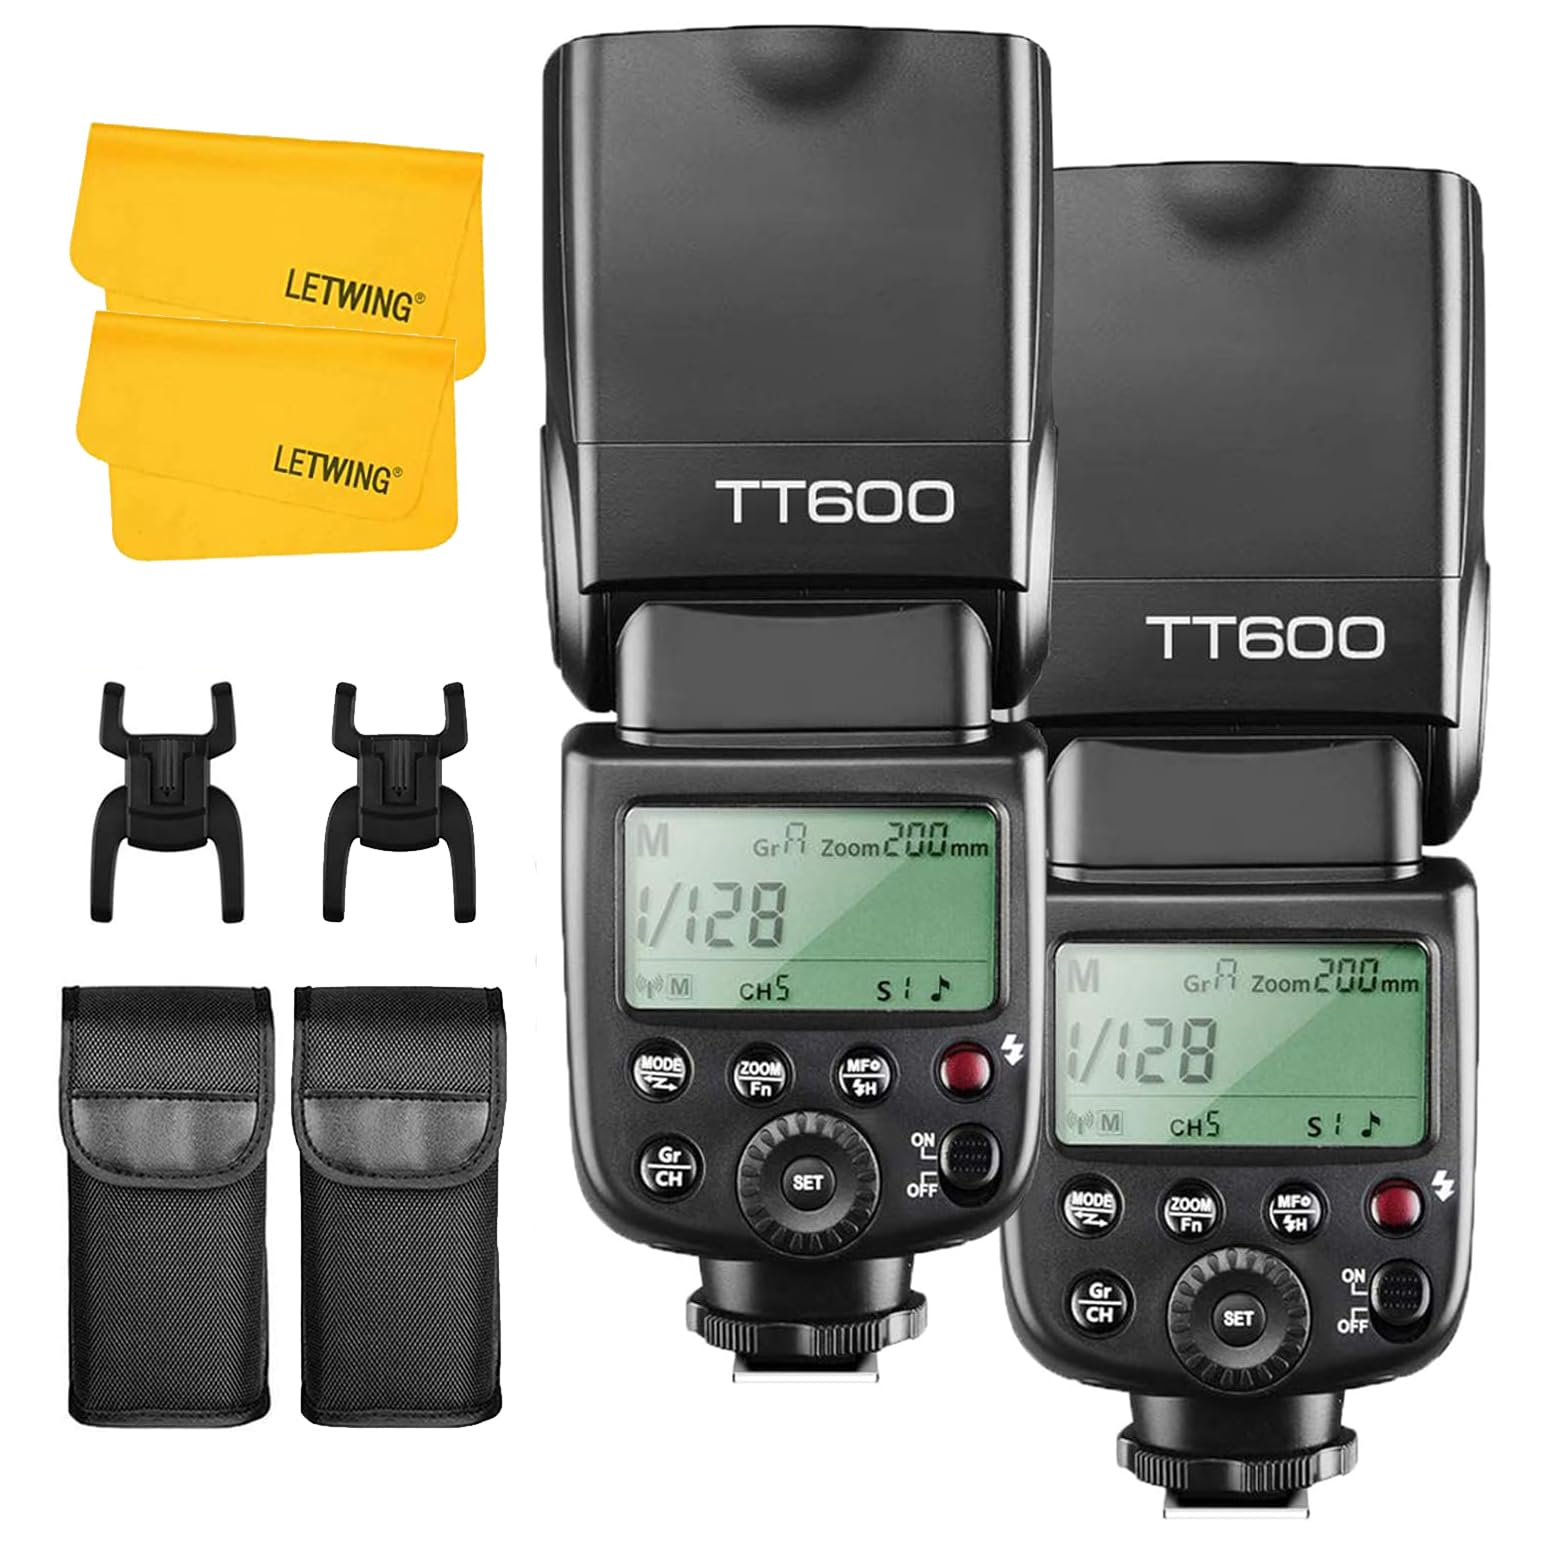 GODOX 正規代理店/日本語説明書付GODOX Thinklite TT600 フラッシュ スピードライト ストロボ 内蔵2.4G ワイヤレストリガ システム 1/8000S高速シンクロ Canon, Nikon, Pentax, Olympus DSLR カメラ対応 (2個入り) 並行輸入品